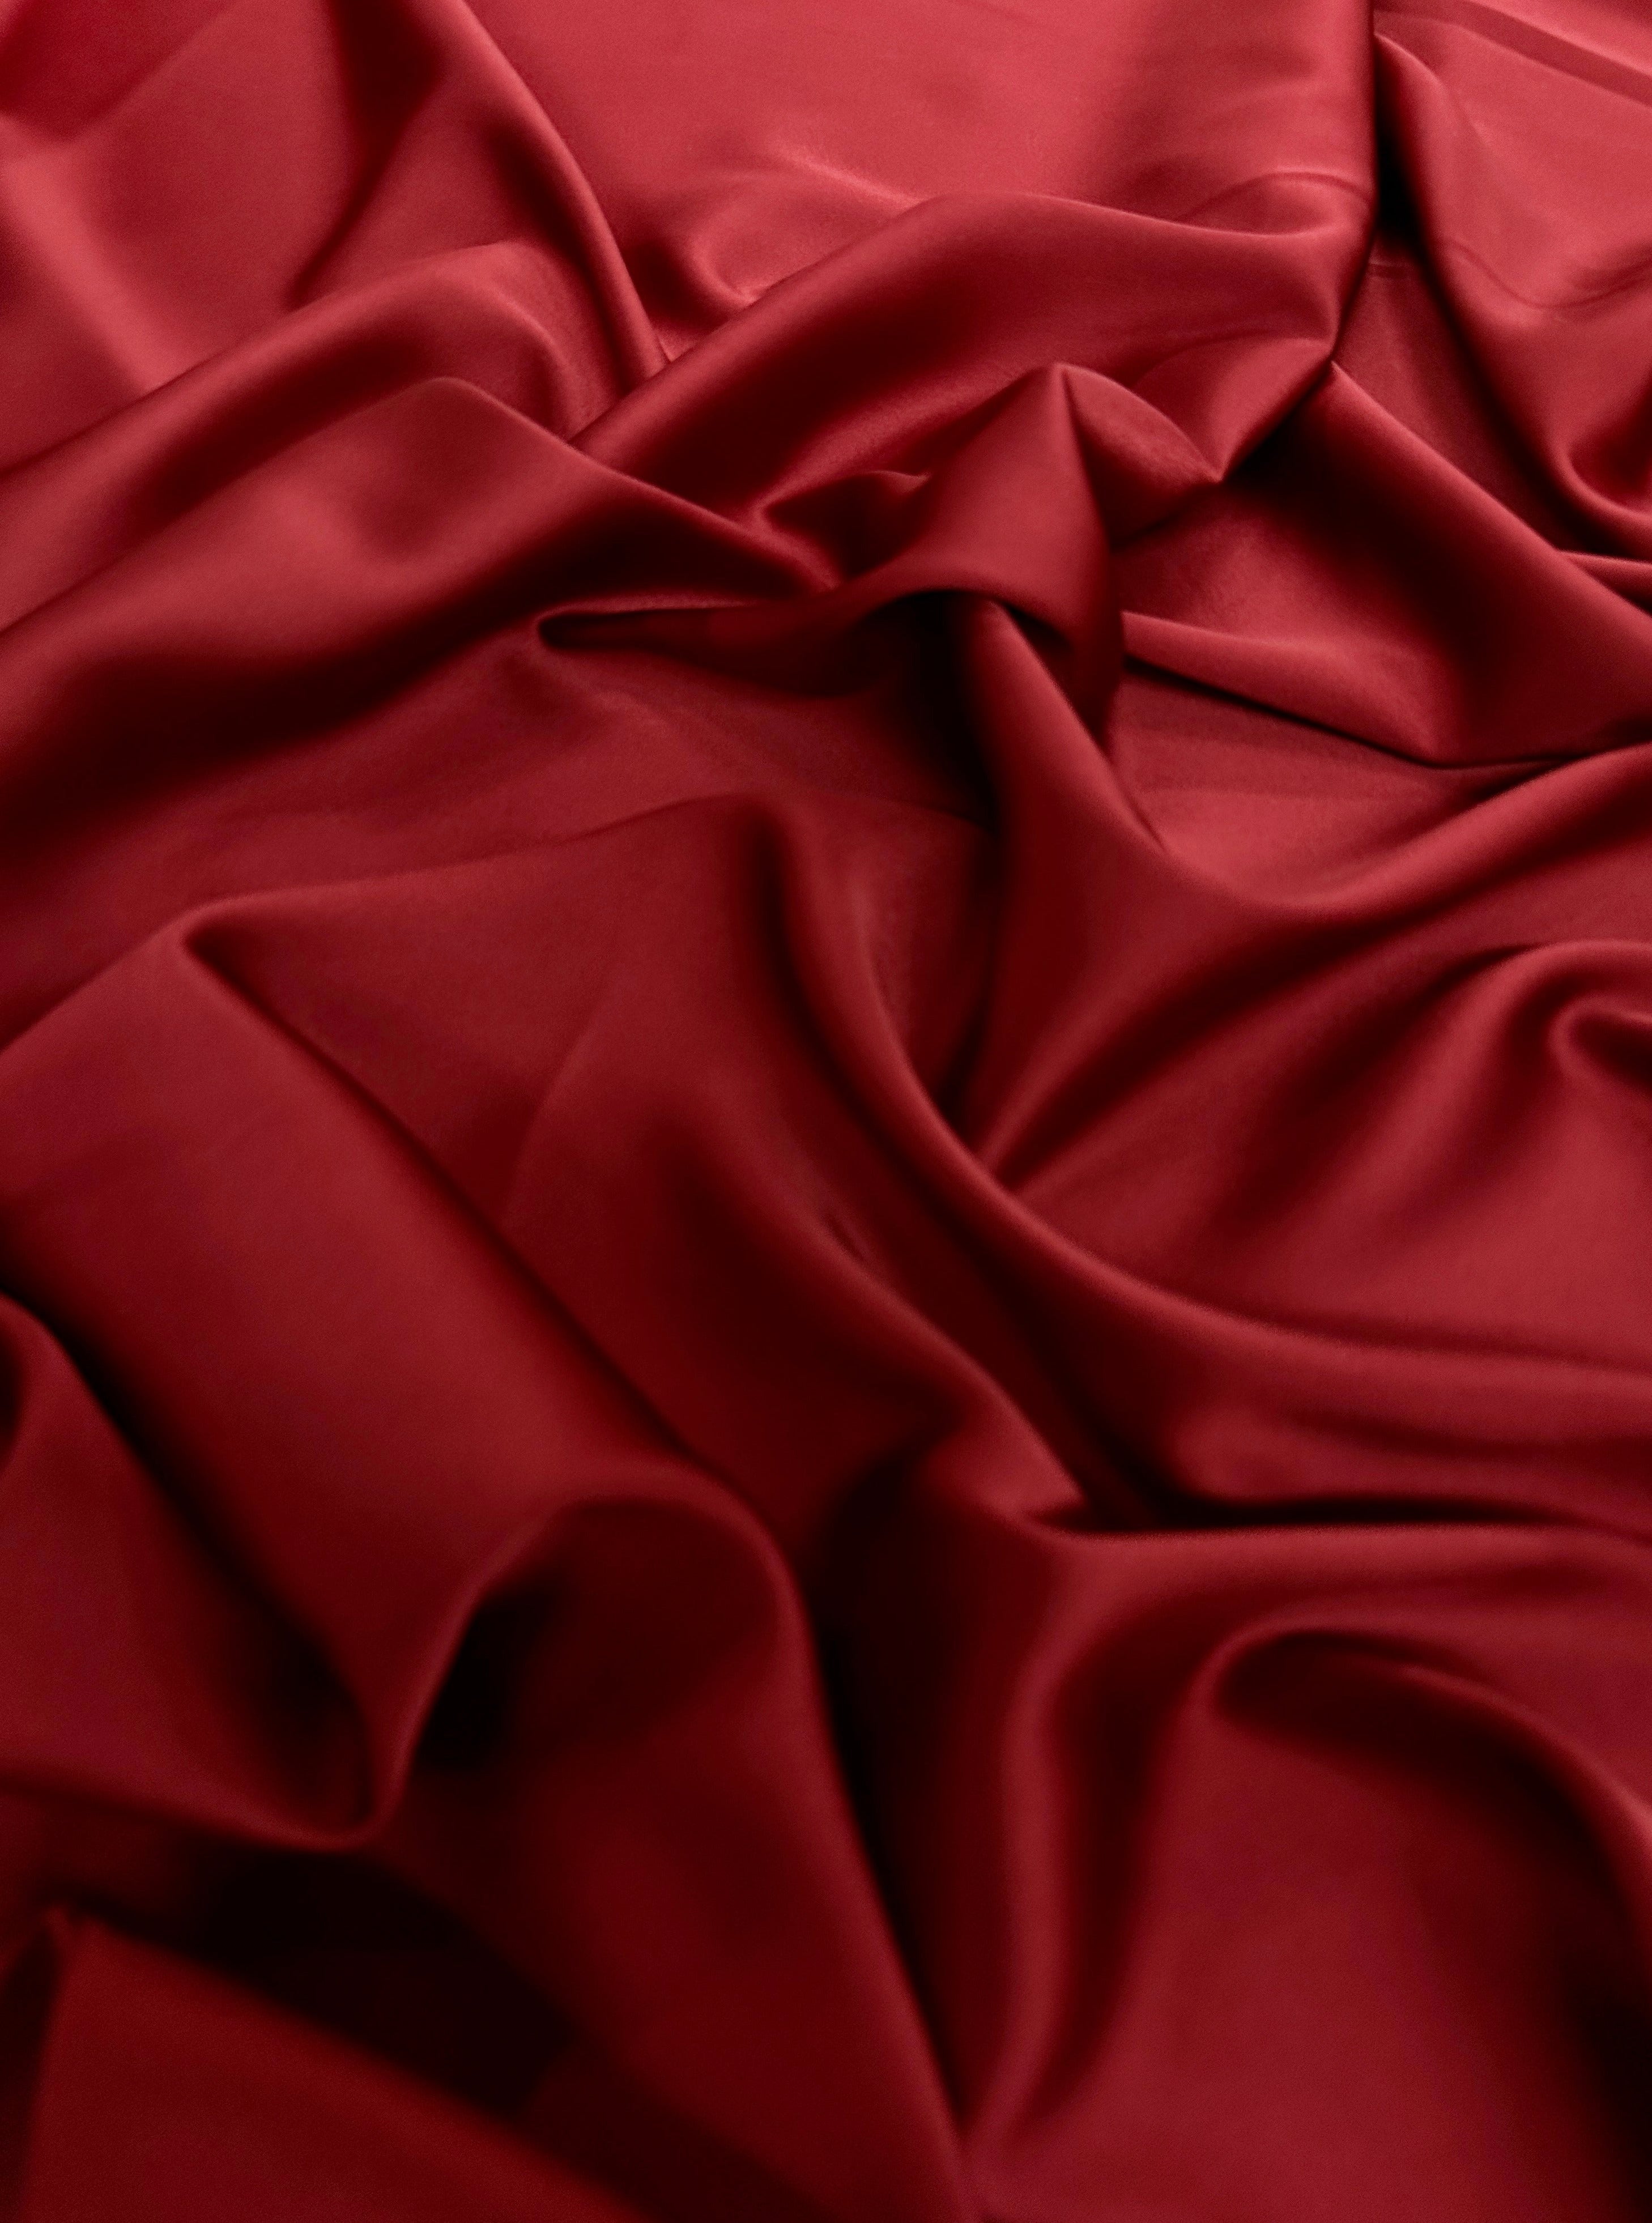 burgundy natural stretch silk, stretch silk, wine red pure silk, cheap silk online, buy red silk online, kikitextiles, burgundy color fabric for dresses, burgundy color silk satin, blood red charmeuse satin, burgundy slip dress silk, silk fabric by the yard, satin fabric sale, natural fabric by the yard silk, 100% silk fabric, 100% pure silk, burgundy silk, red silk, wine red silk, blood red silk, luxury silk